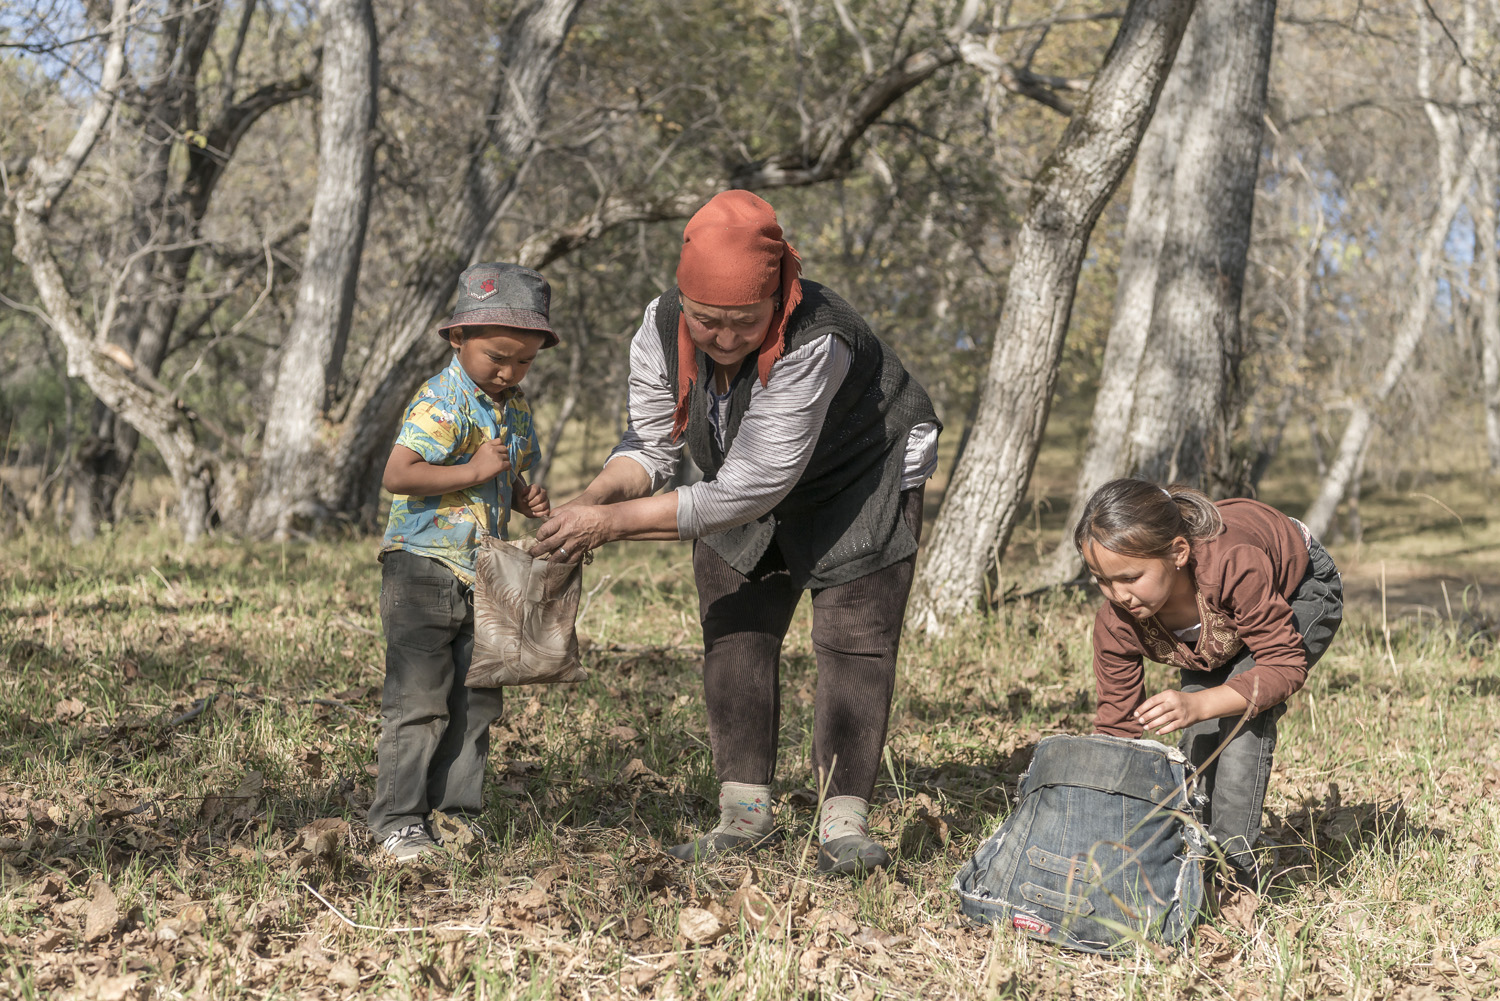 walnuts-picking-kyrgyzstan-child-arslanbob-soviet-union-russia-family-picking-walnuts.jpg